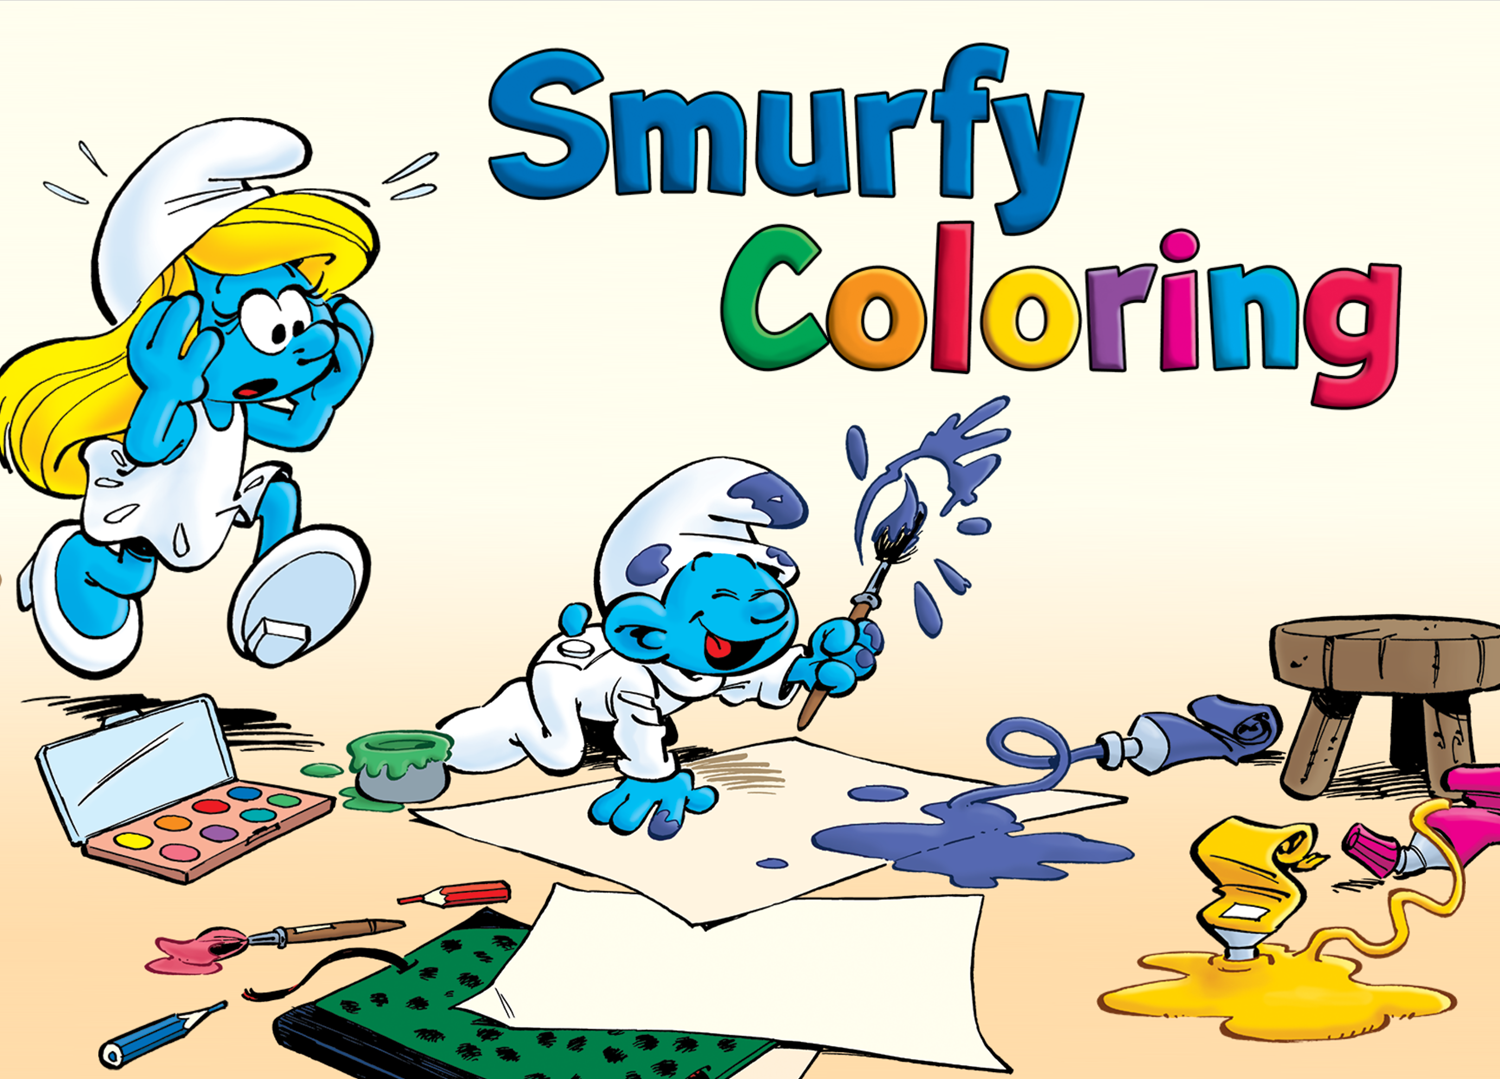 Smurfy Coloring Welcome Screen Screenshots.